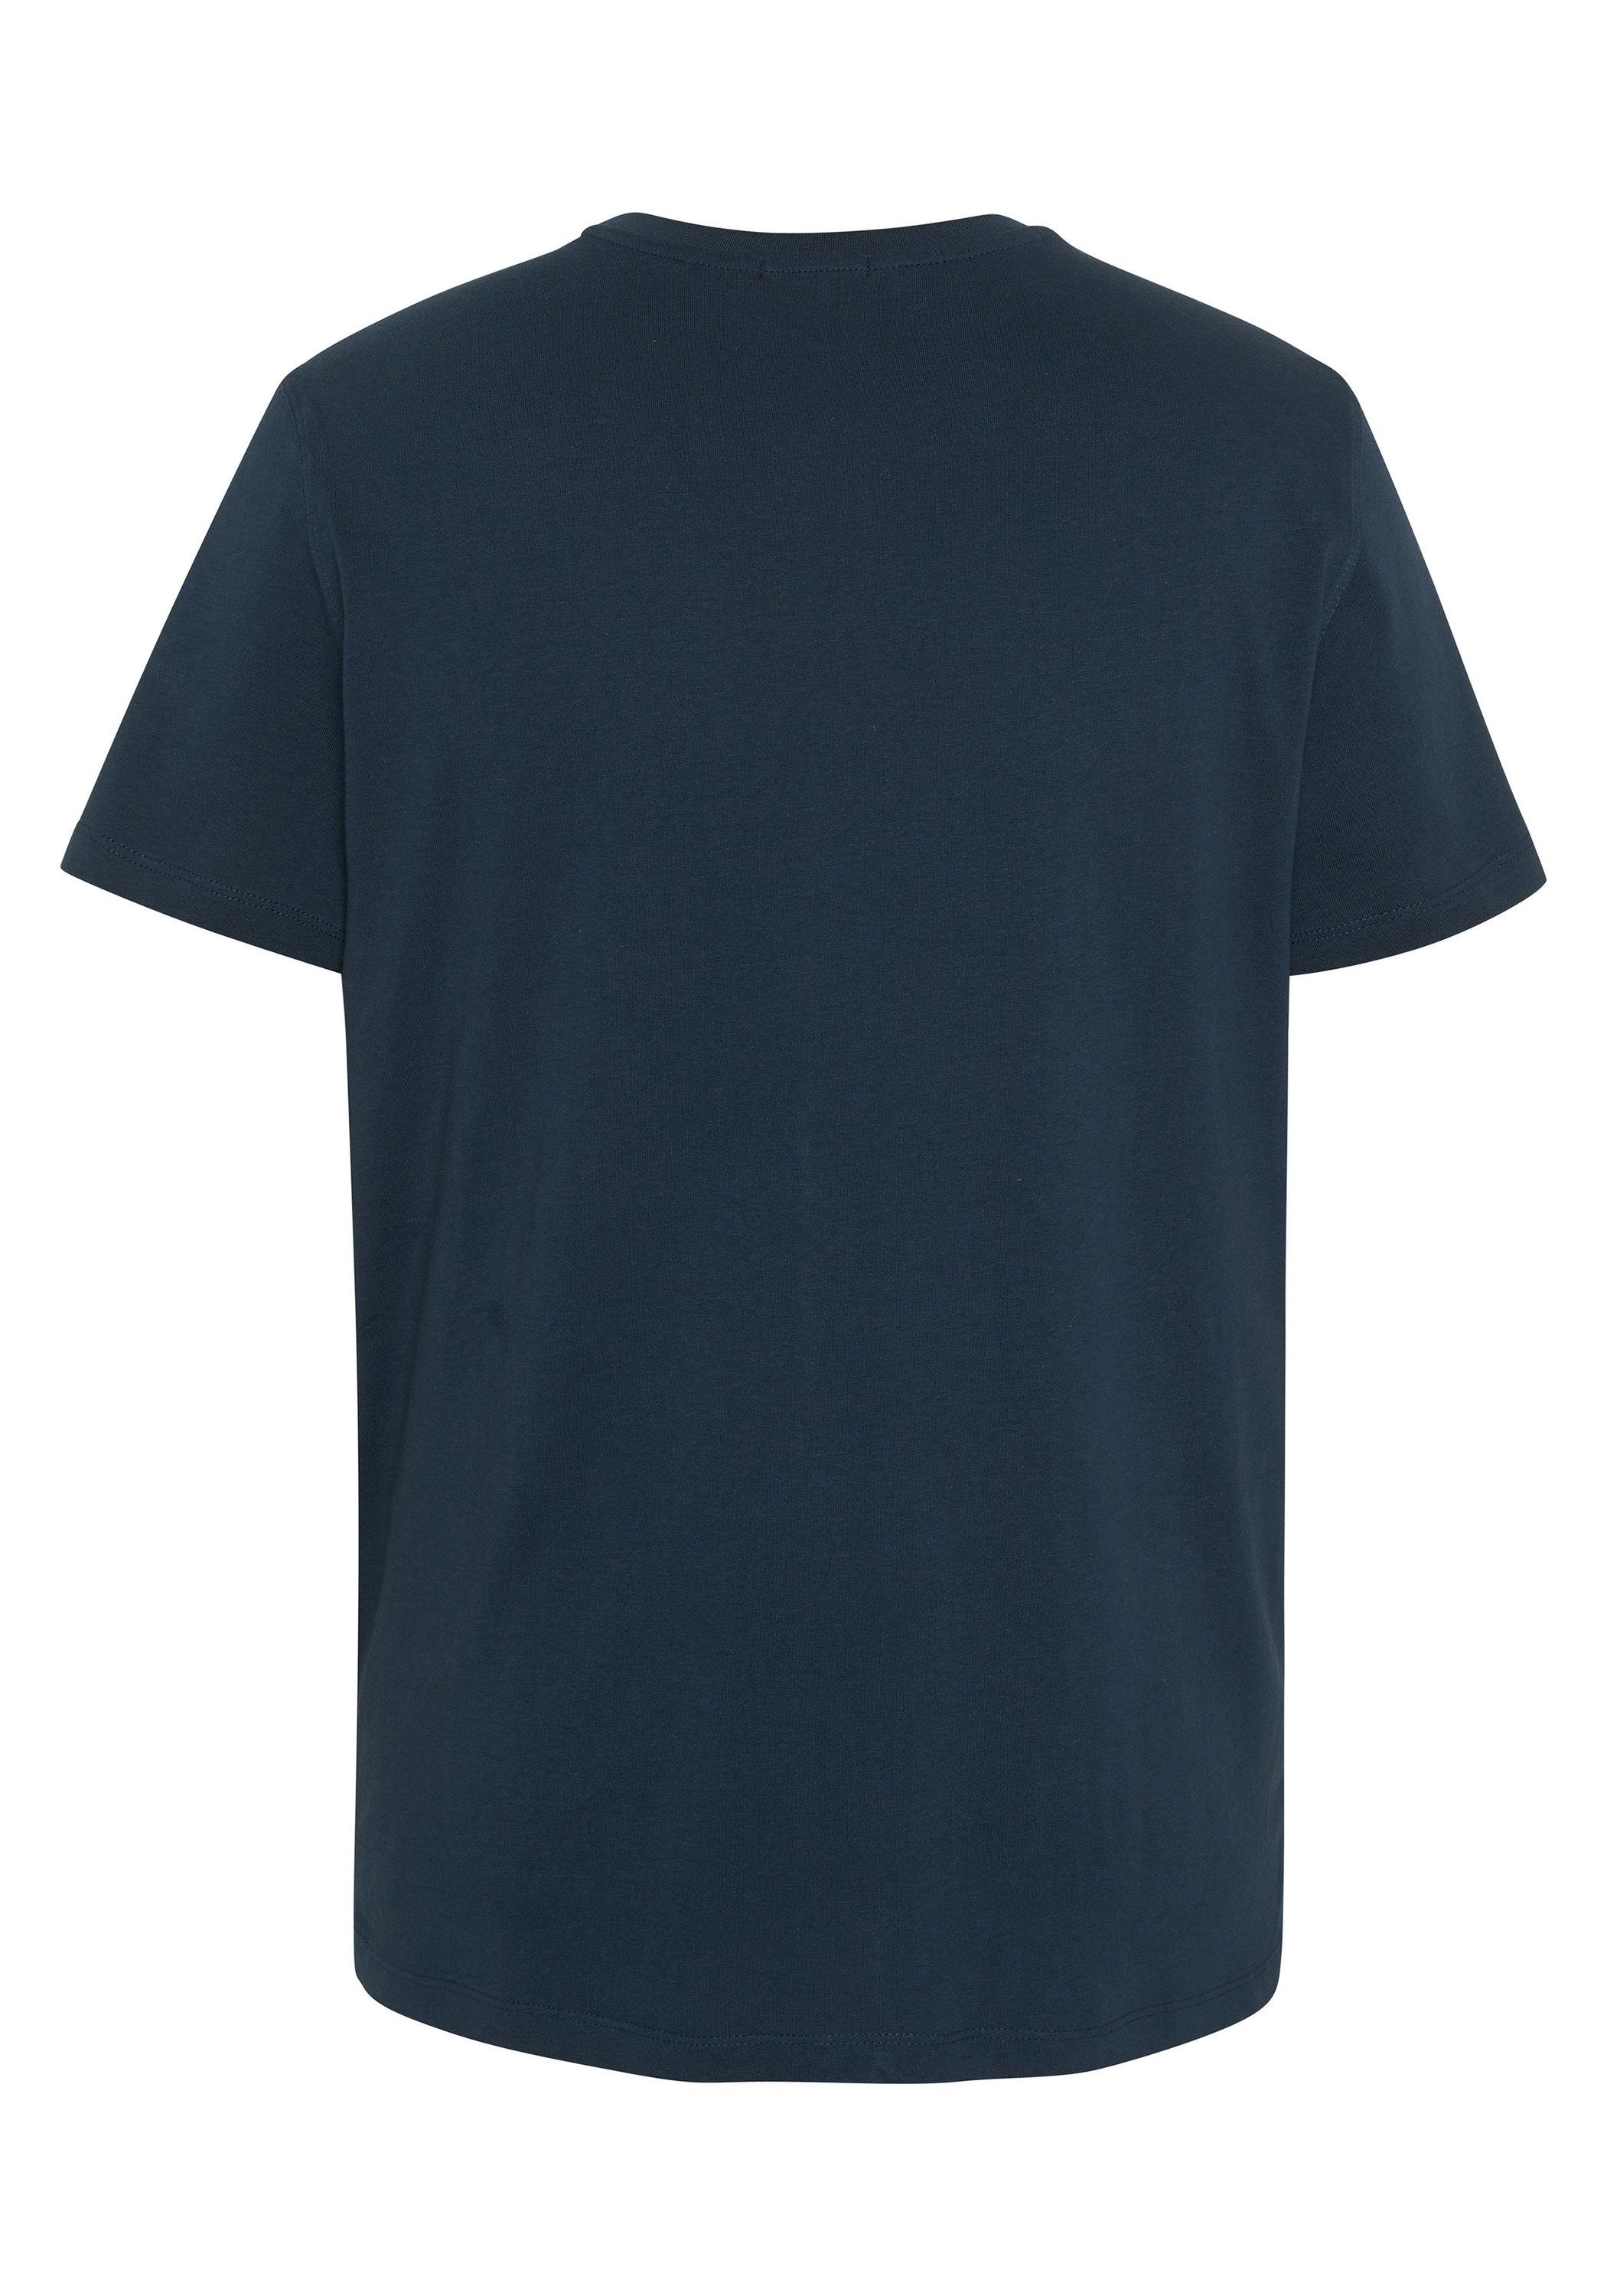 19-4010 T-Shirt Eclipse Total 1 Label-Schriftzug mit Chiemsee Print-Shirt